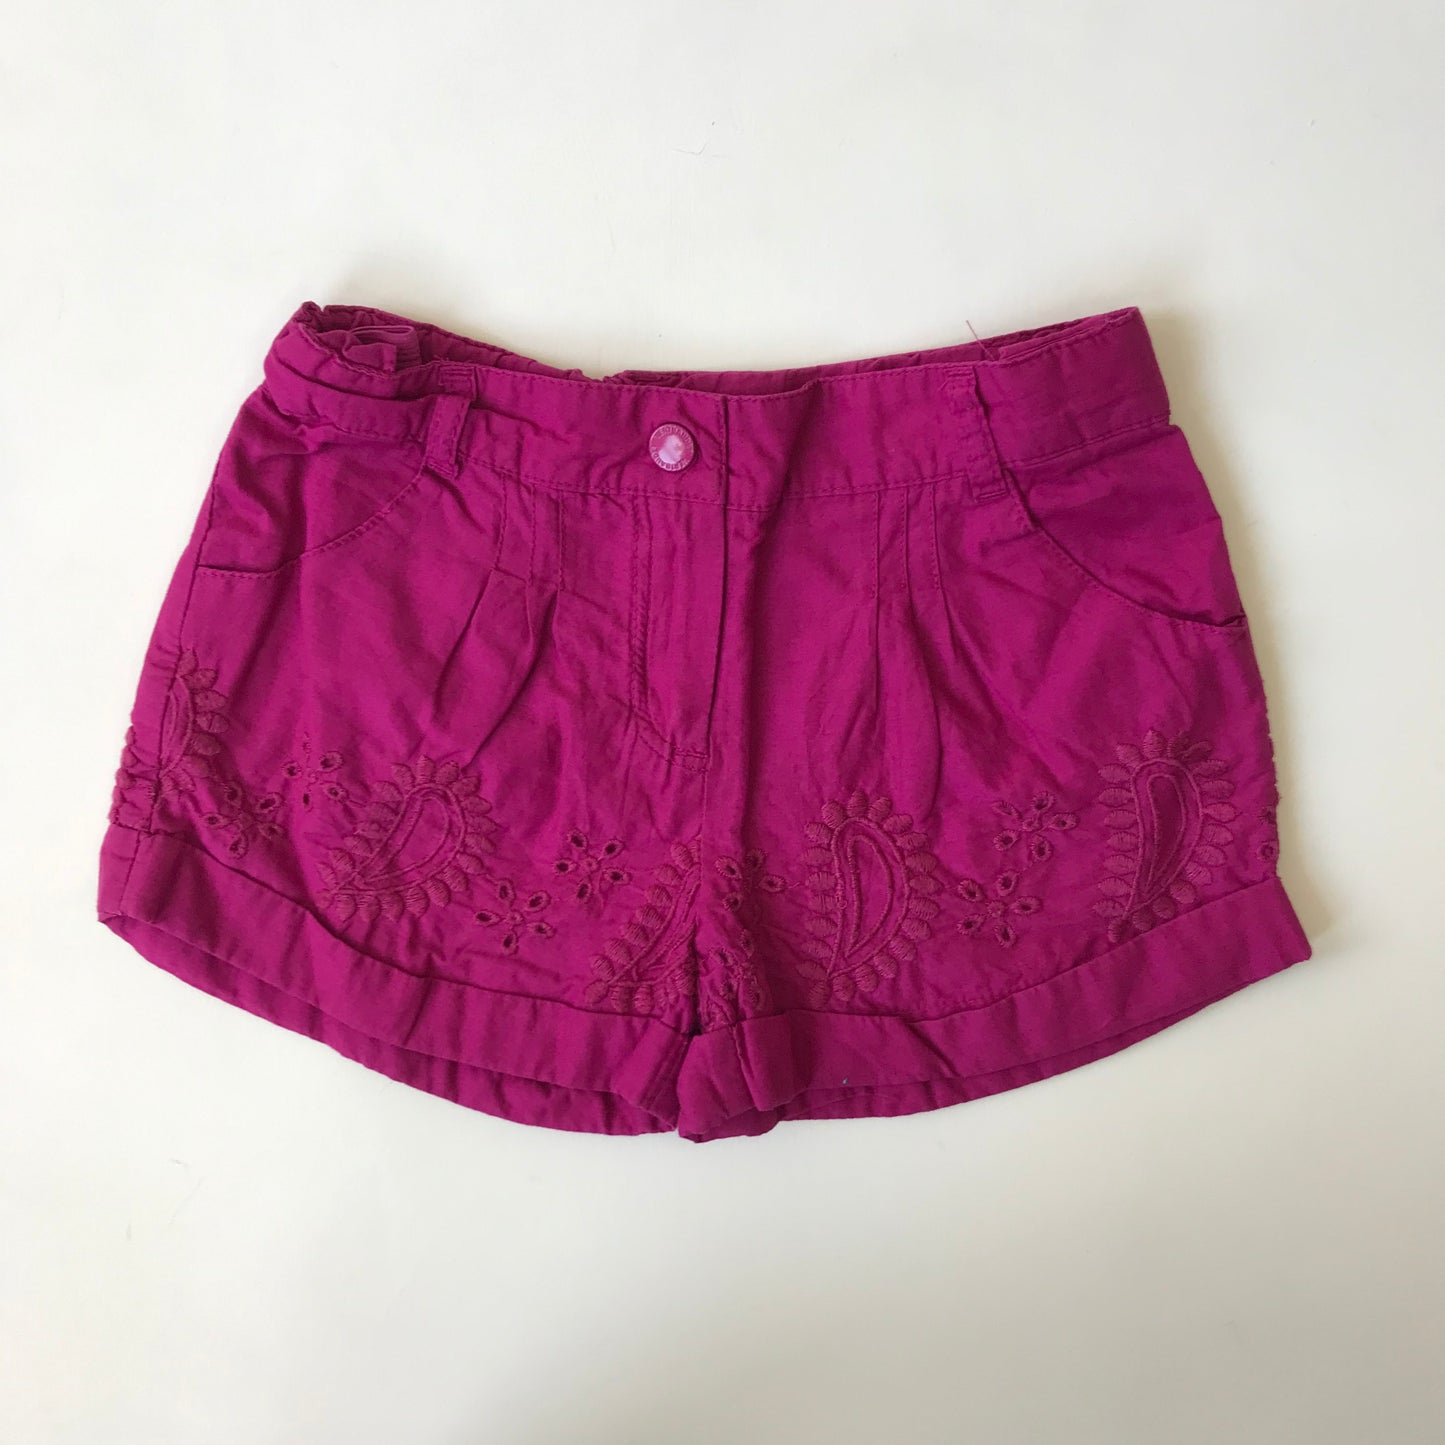 Shorts - Pink - Age 8